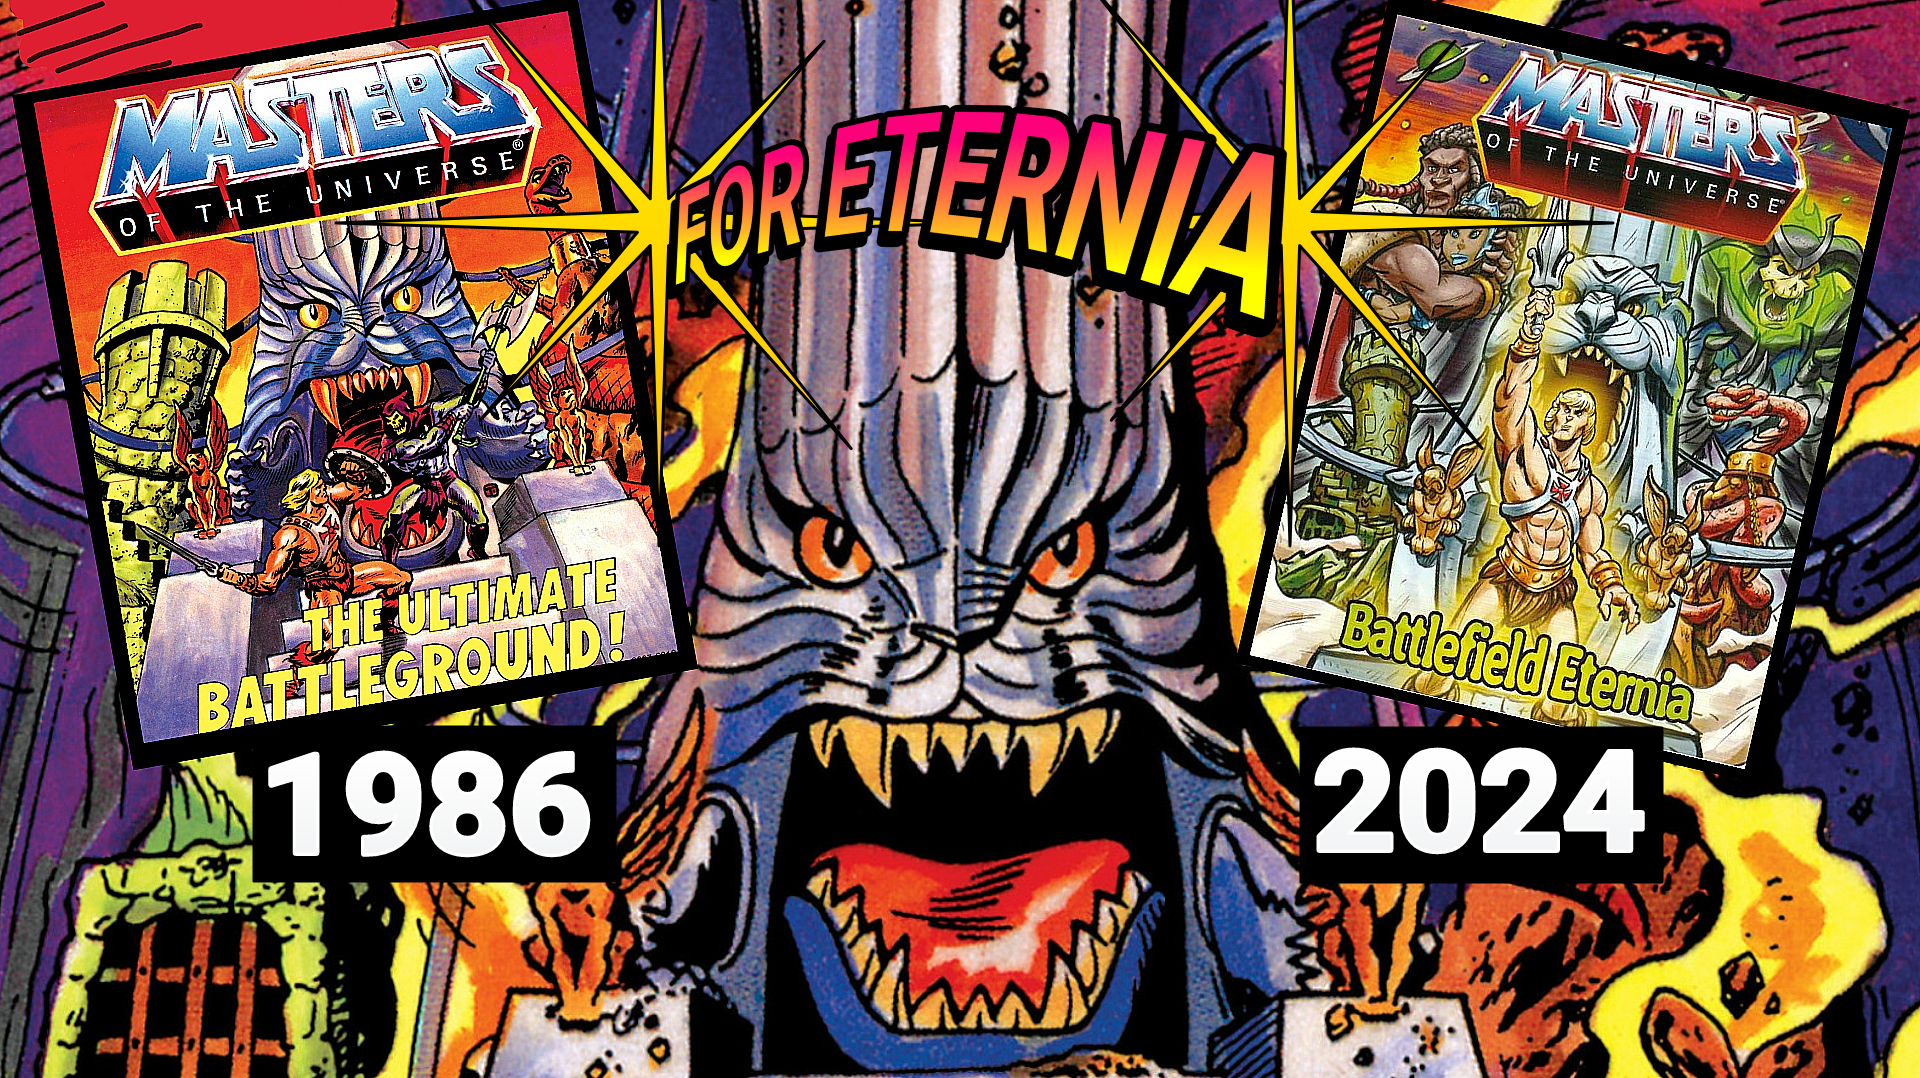 New Eternia Playset minicomic continues original 1986 story, 40 years later